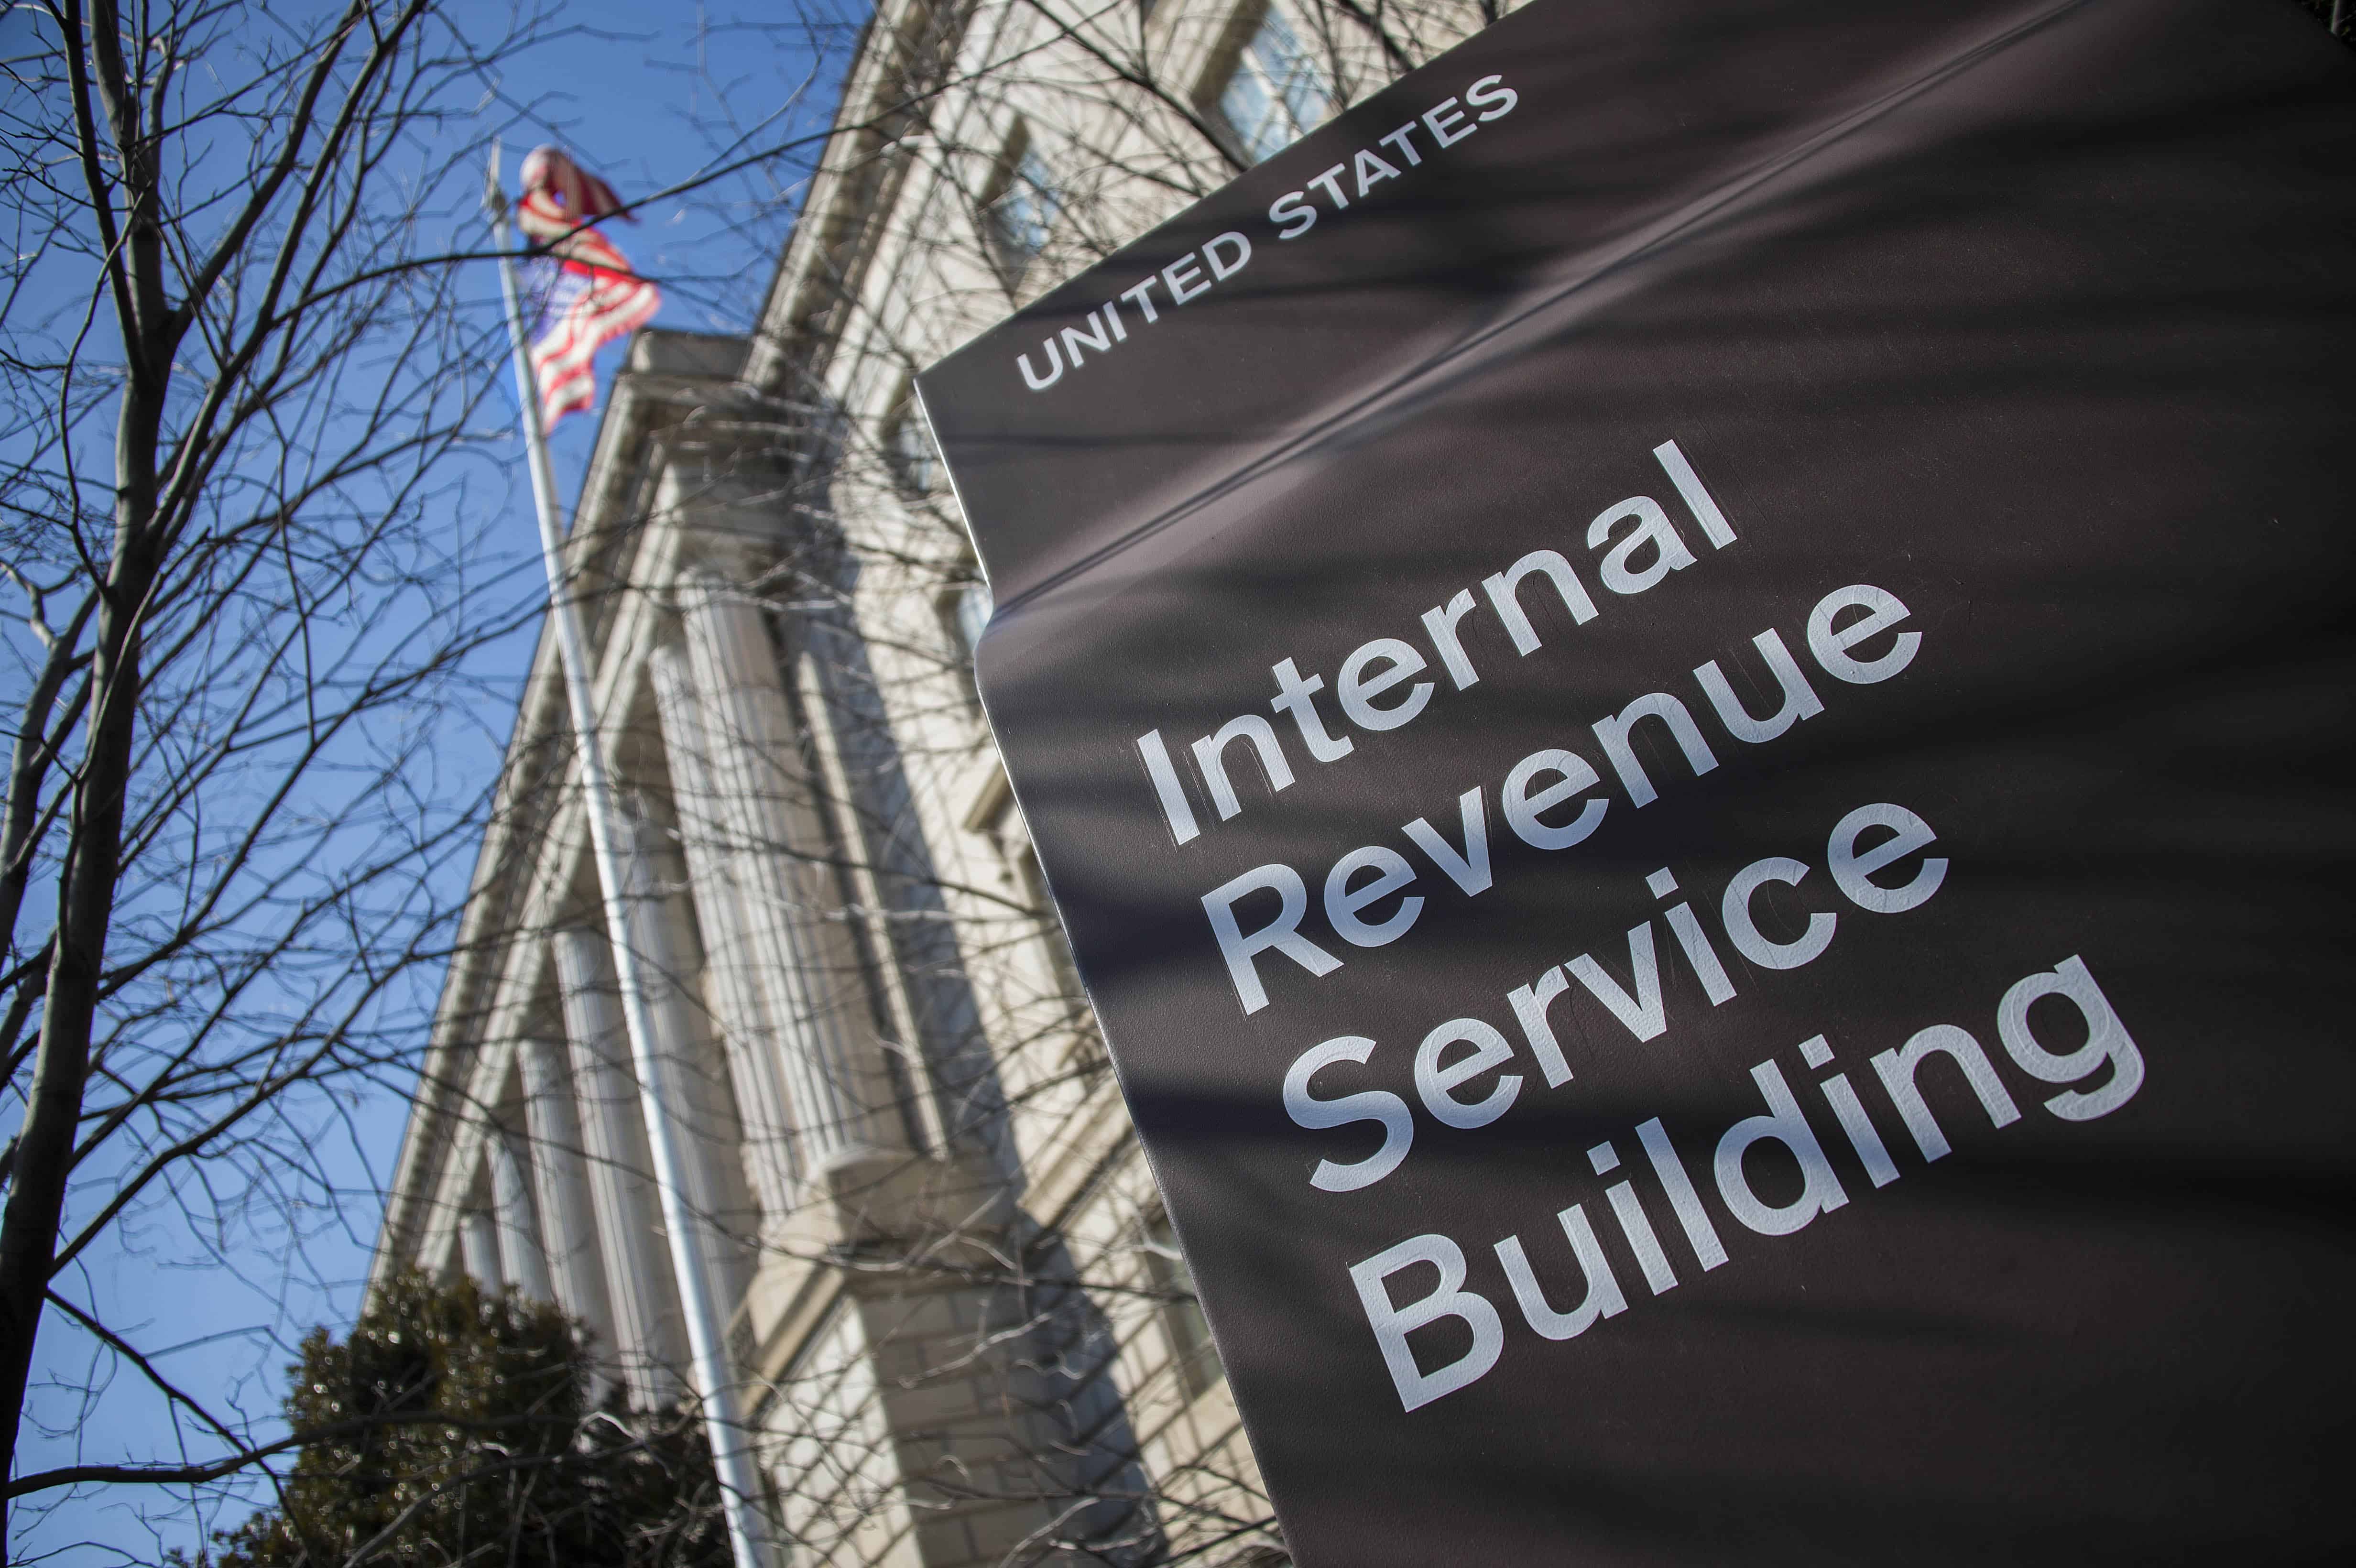 FATCA: The IRS building in Washington, D.C.